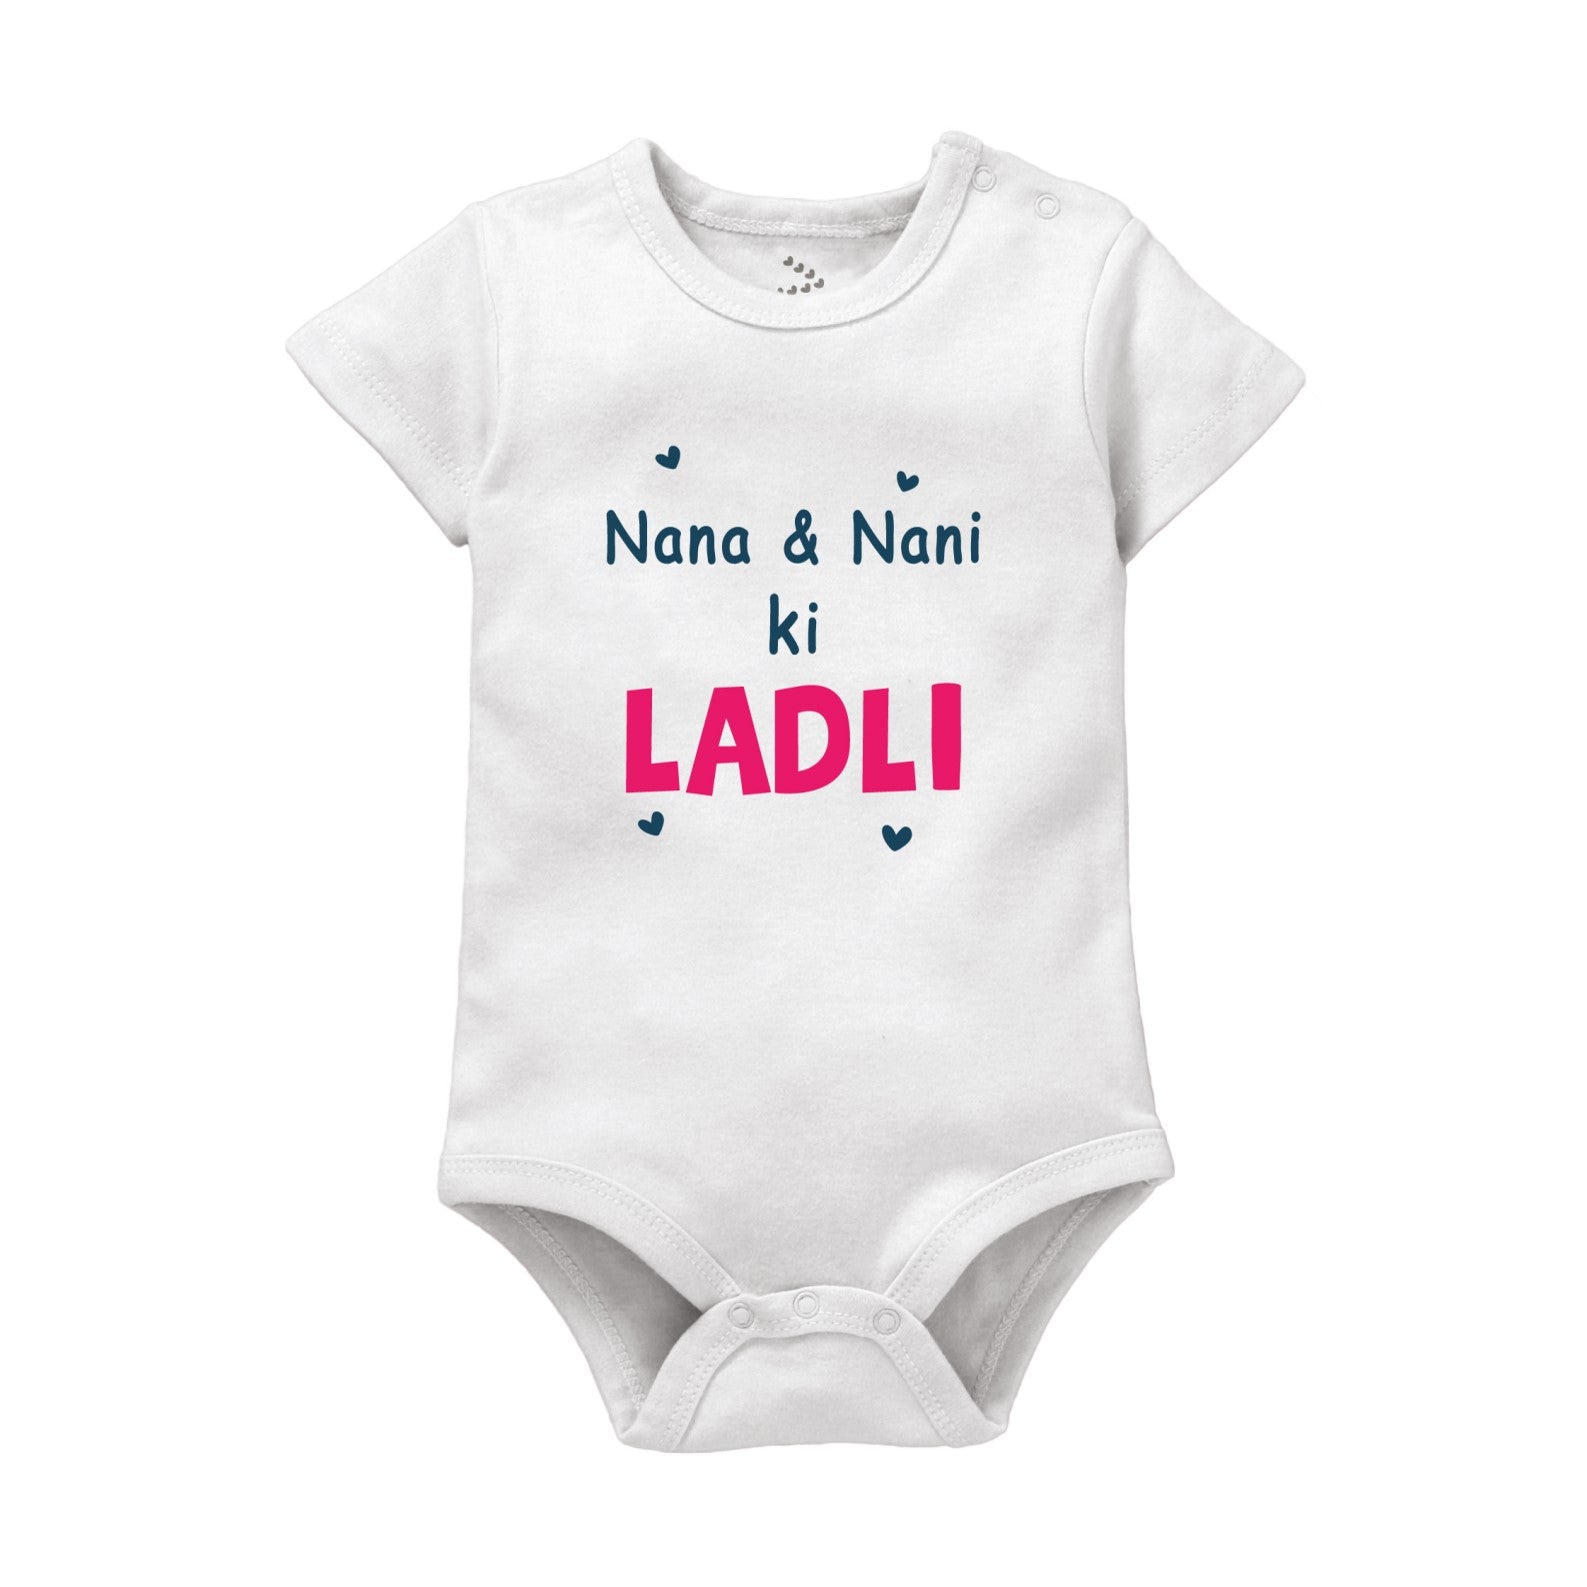 Nana & Nani ki Ladli Printed Baby Onesie - White